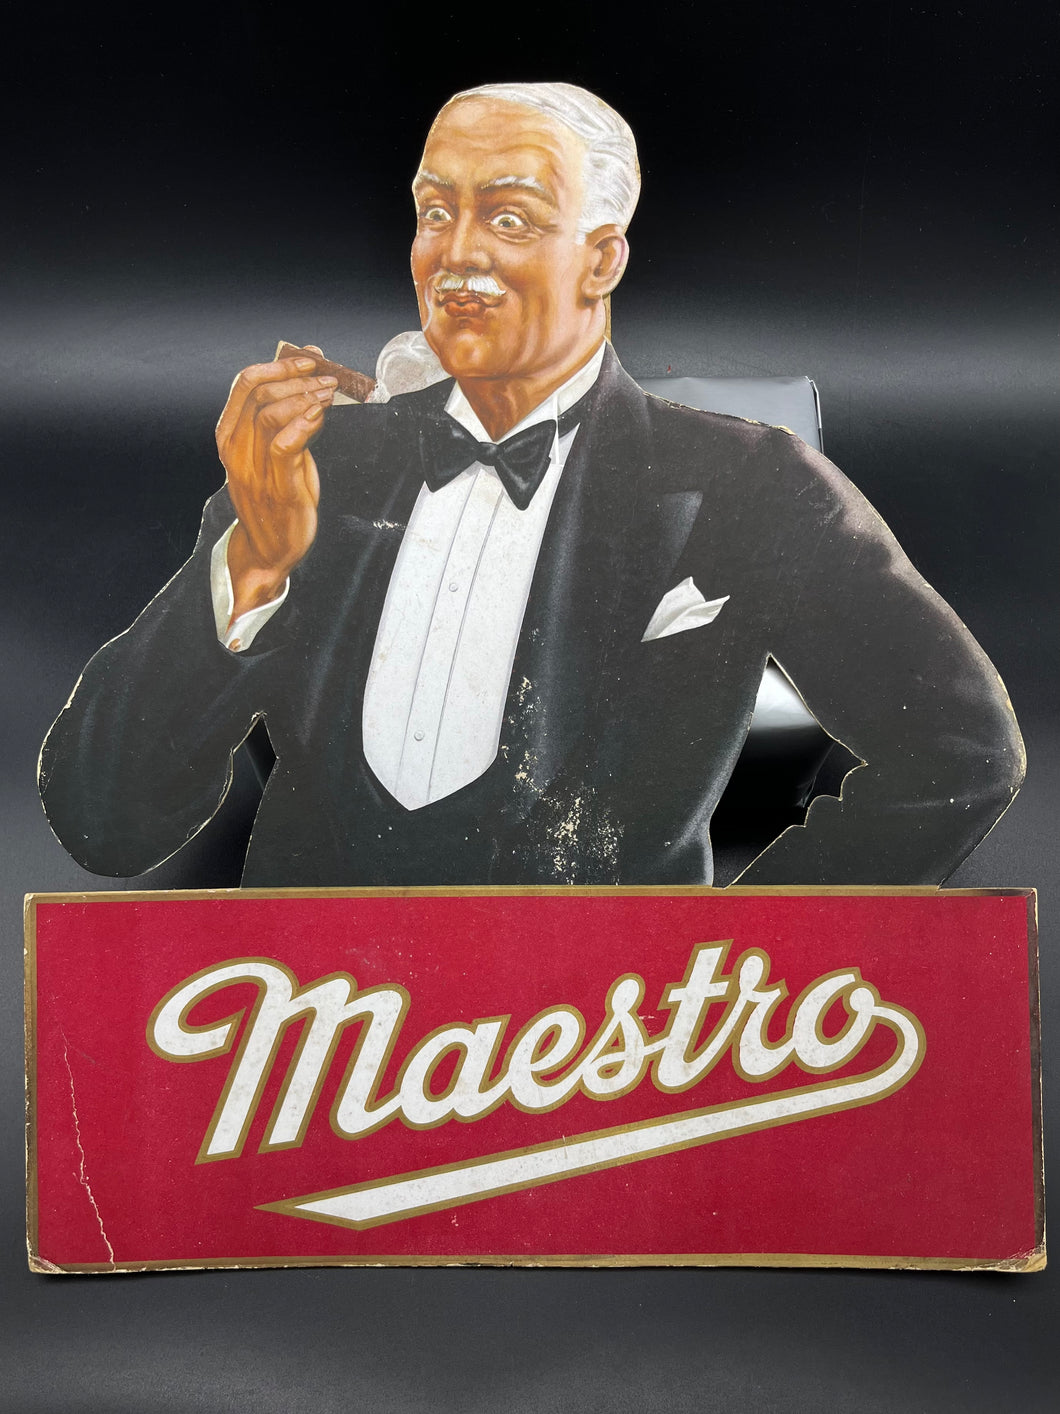 Maestro Cigars Cardboard Counter Display Advertisement